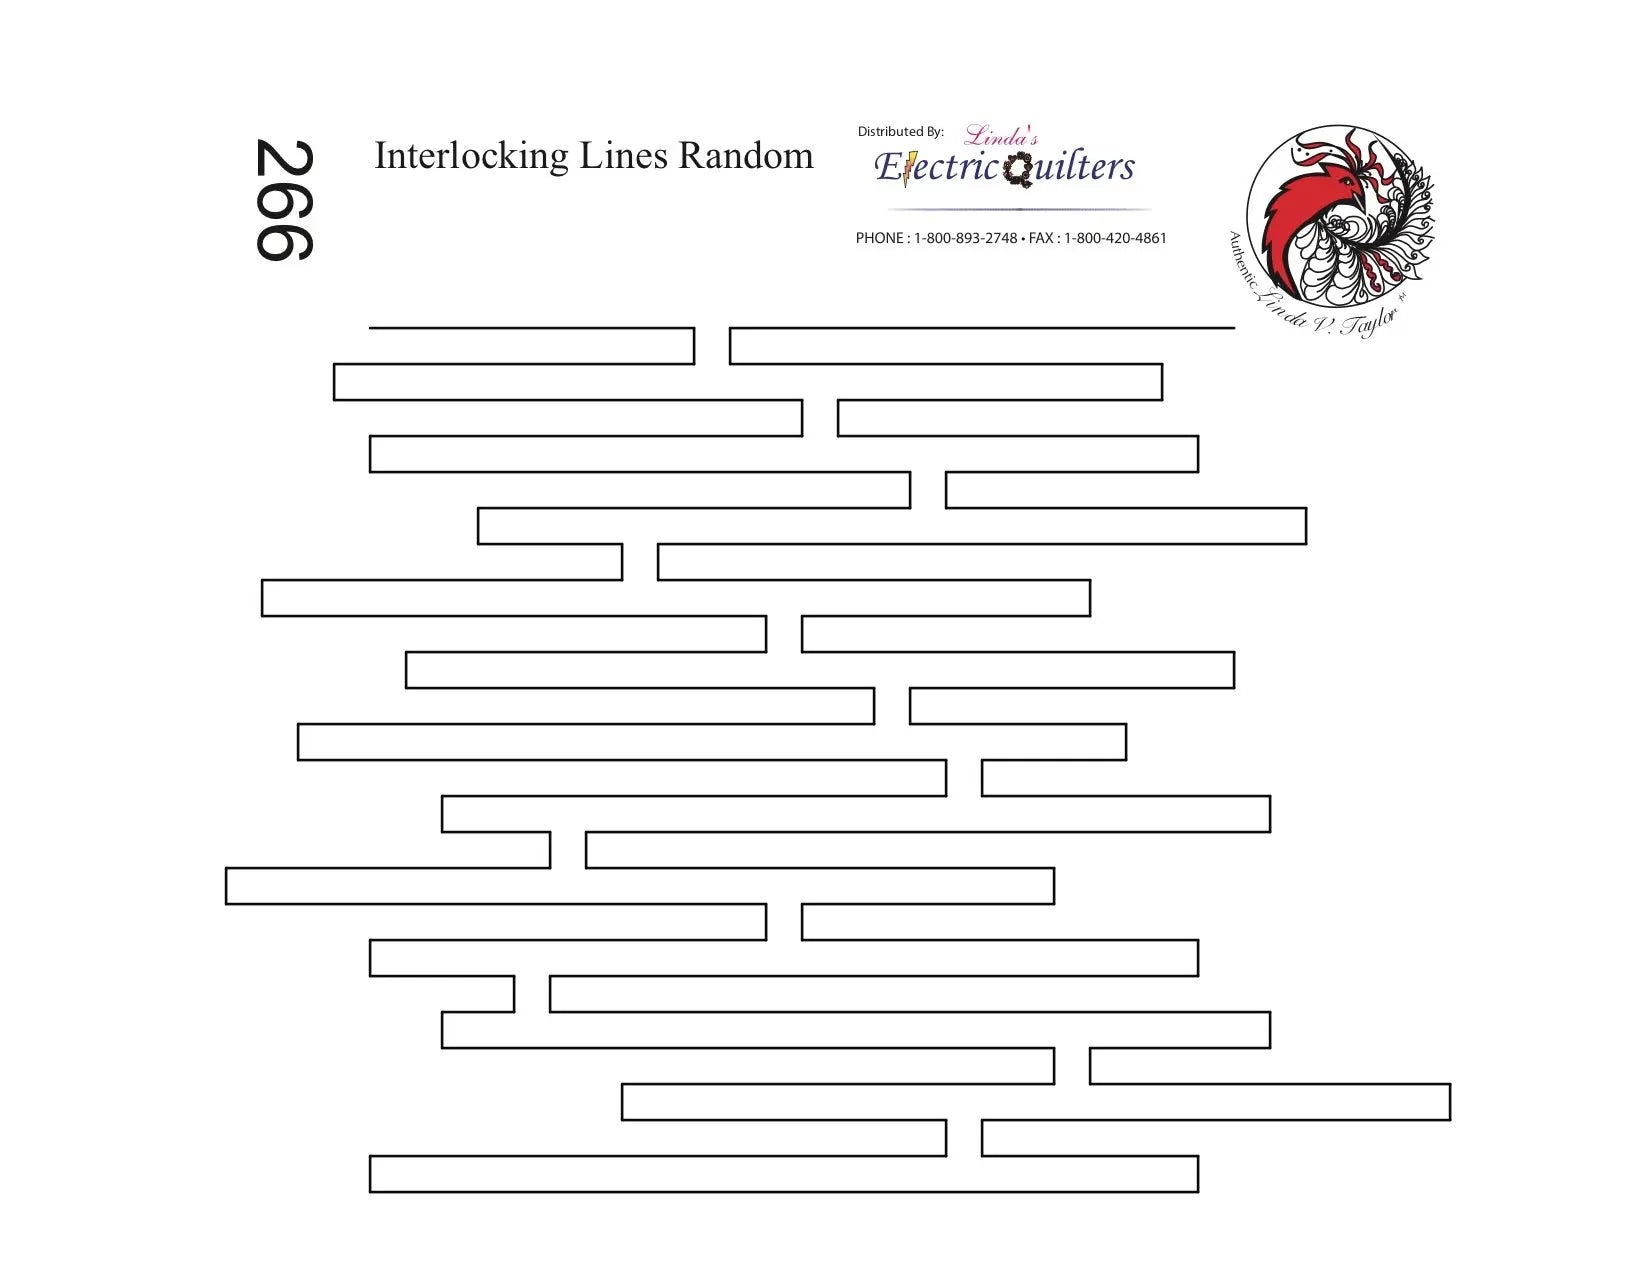 266 Interlocking Lines Random Pantograph by Linda V. Taylor - Linda's Electric Quilters